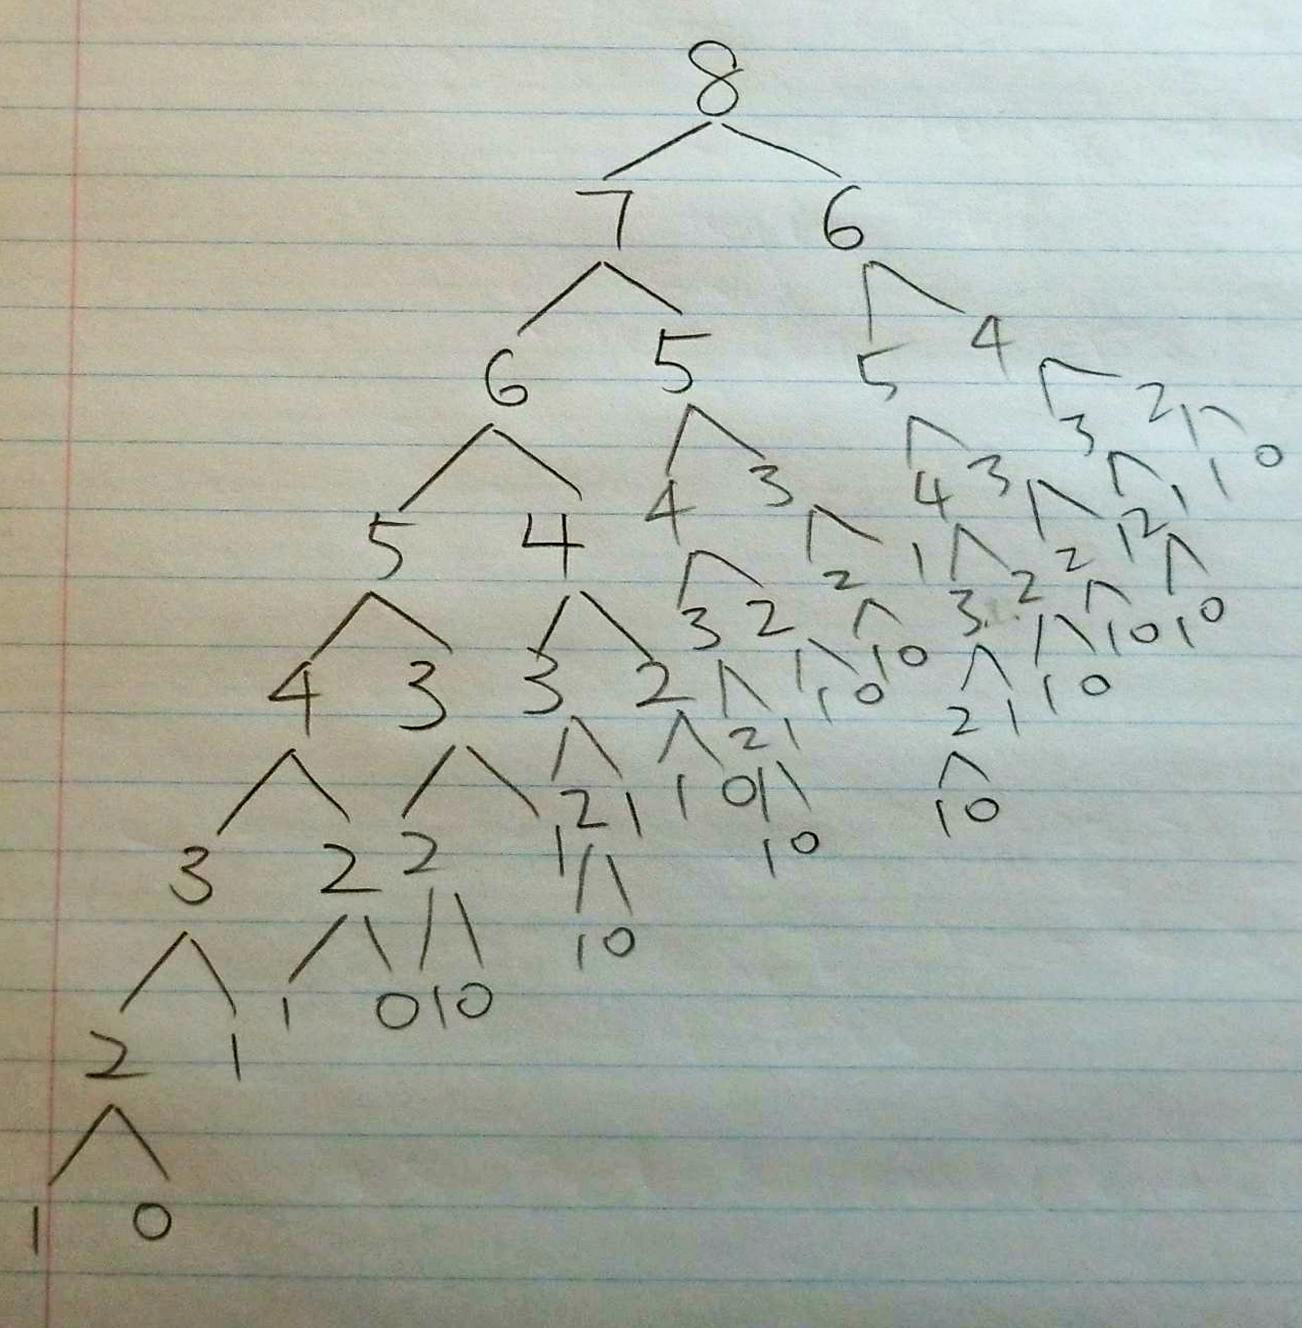 fibonacci number recursive tree diagram for 8